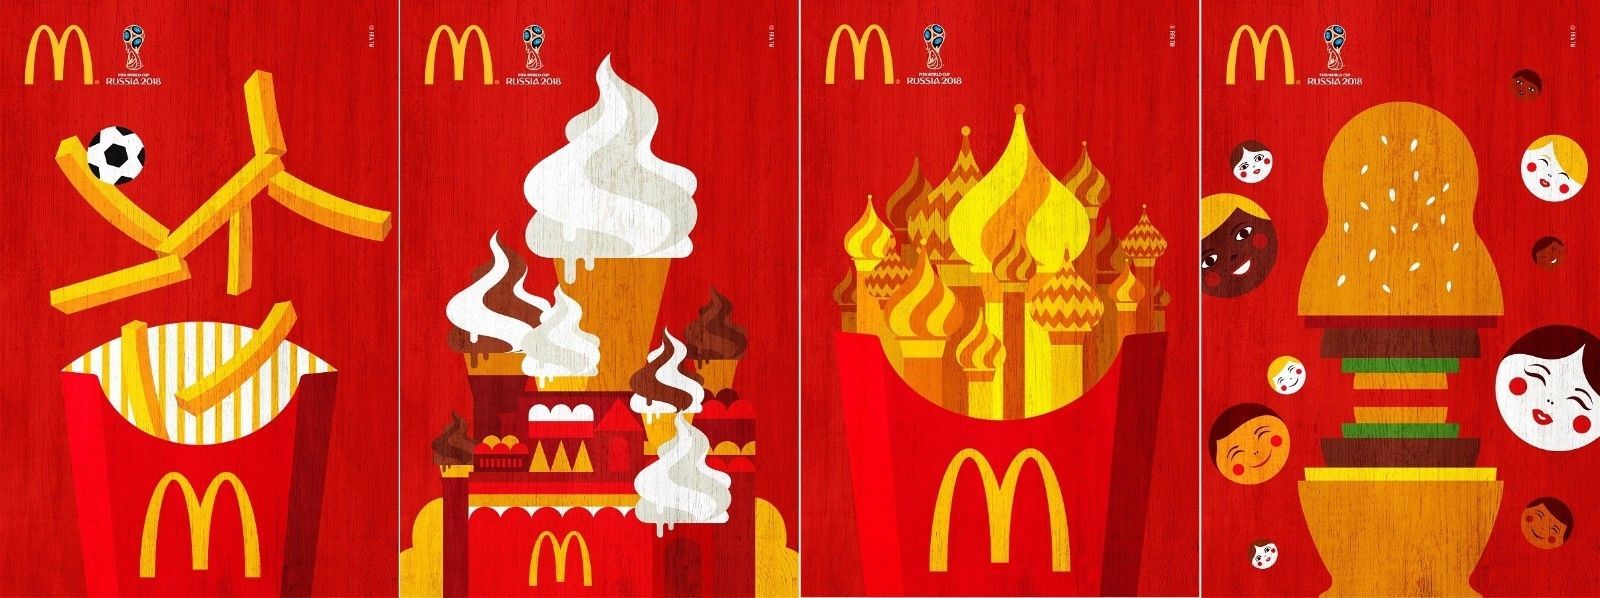 FIFA World Cup McDonald's AD Poster 2018 Soccer Tournament Print 24x36 27x40